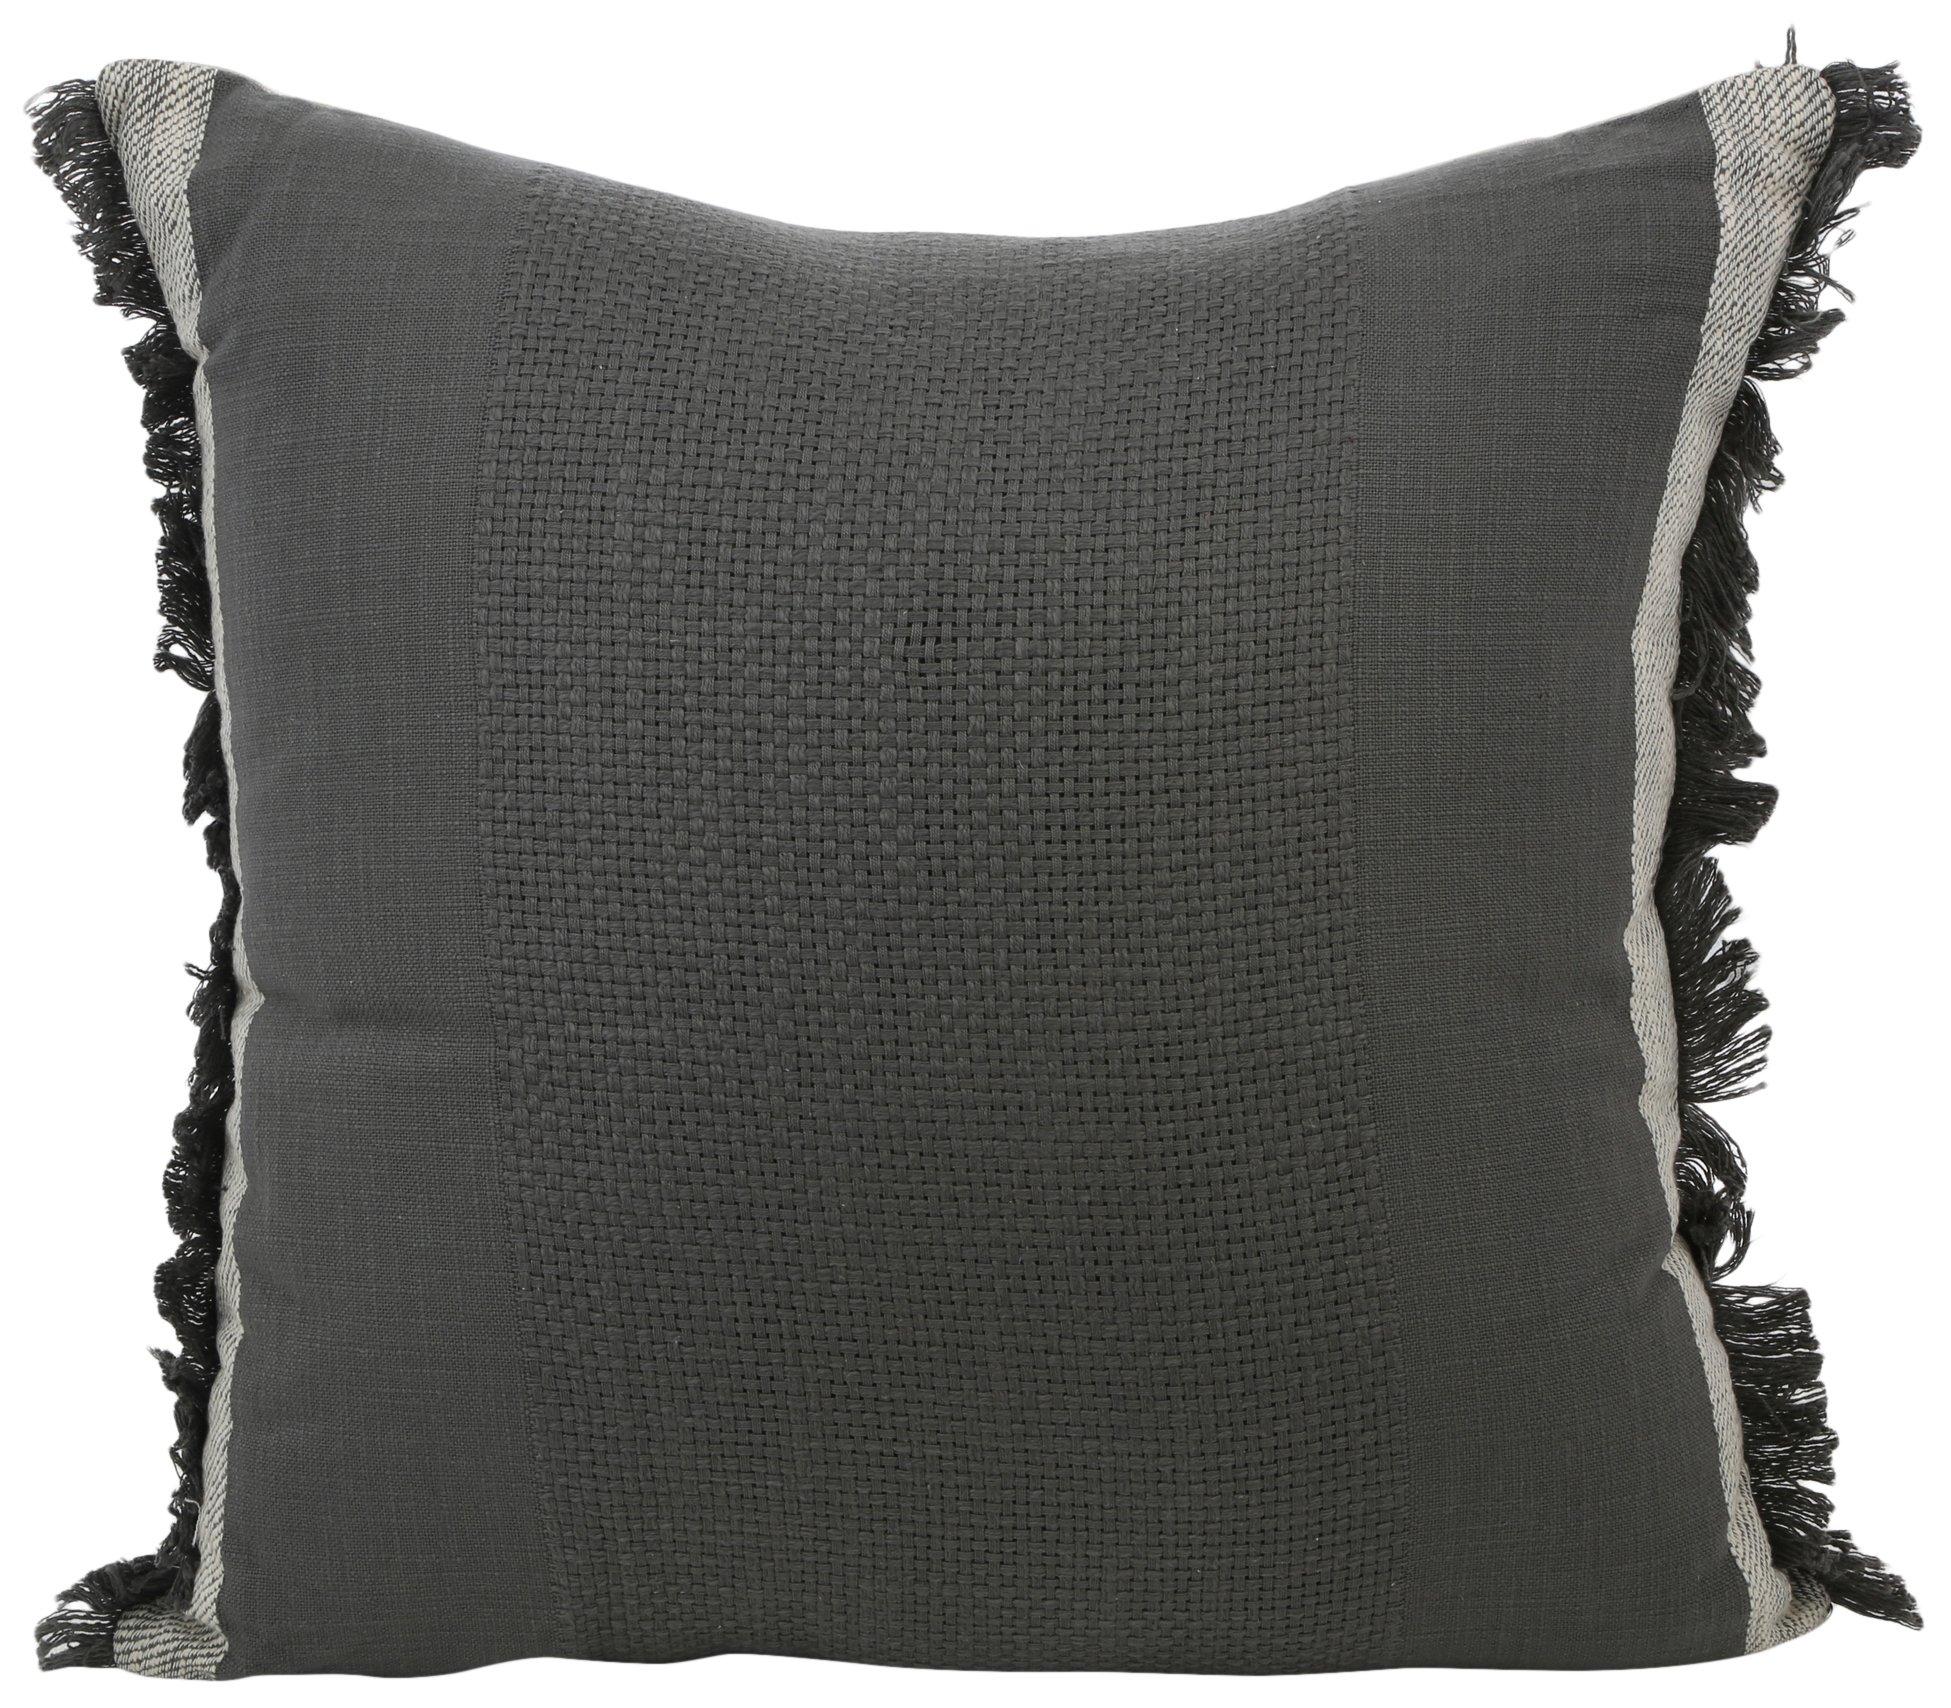 ZEST Kitchen + Home 20x20 Textured Fringe Decorative Pillow